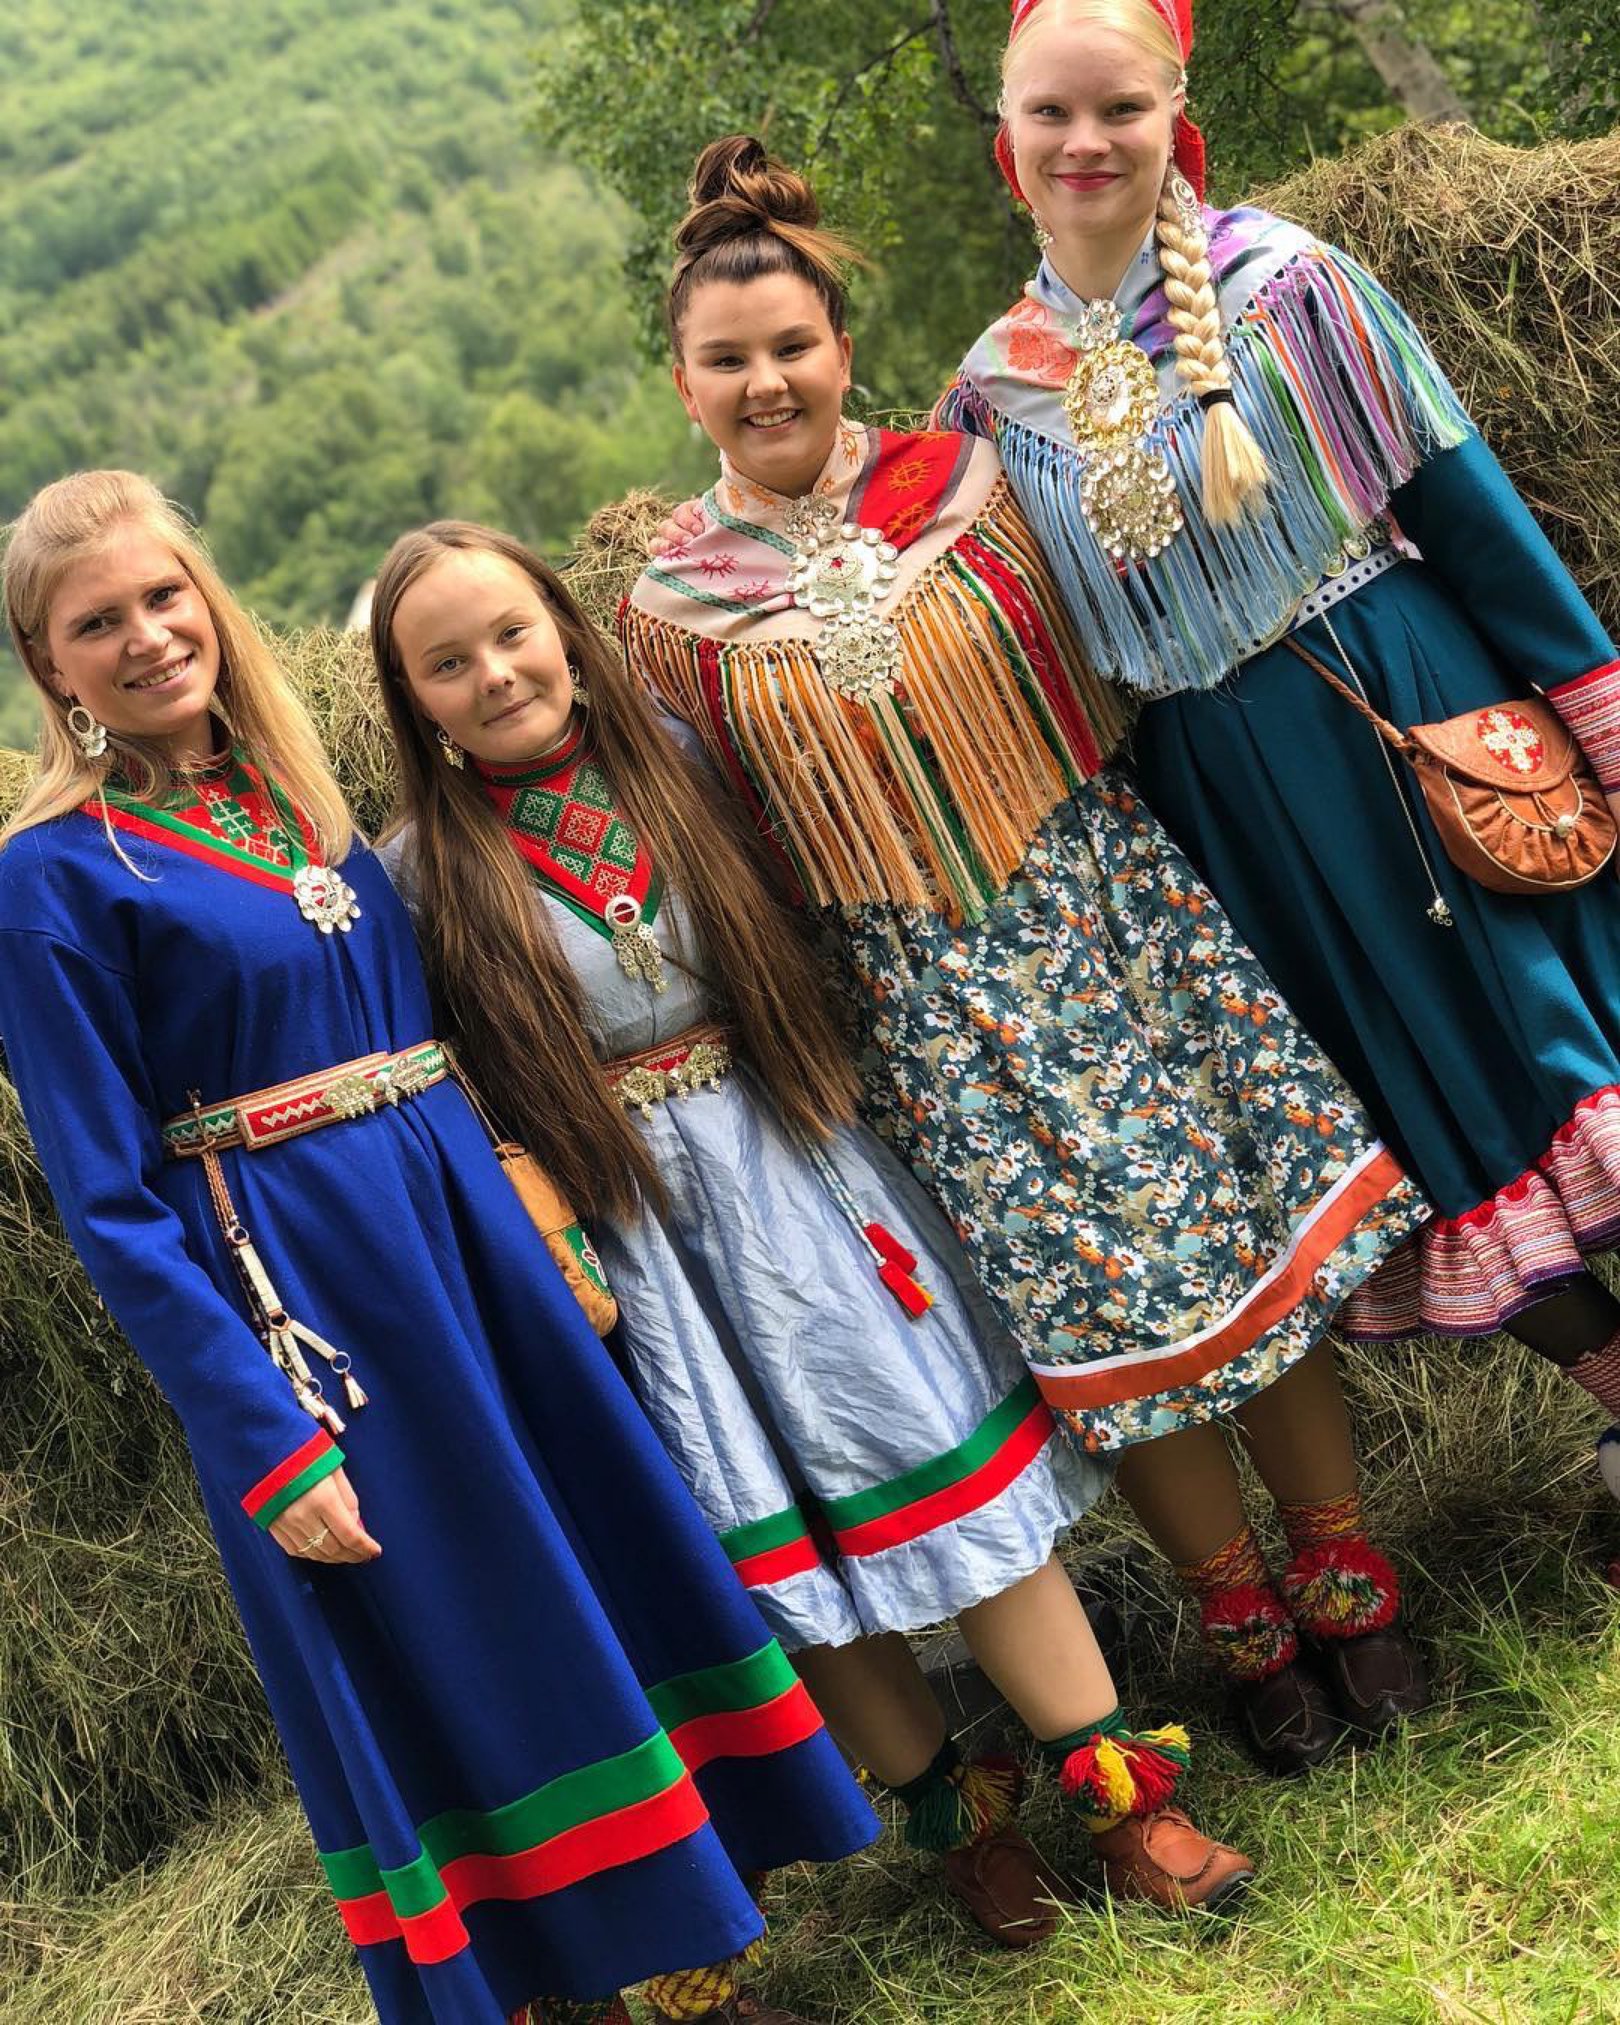 Northern Norway Ar Twitter Laehkoe Biejjine Vuorbbe Biejvijn Lihkku Beivviin Happy Sami National Day Proud Young Sami People Express Their Cultural Heritage In Versatile And Modern Ways Creating Belonging